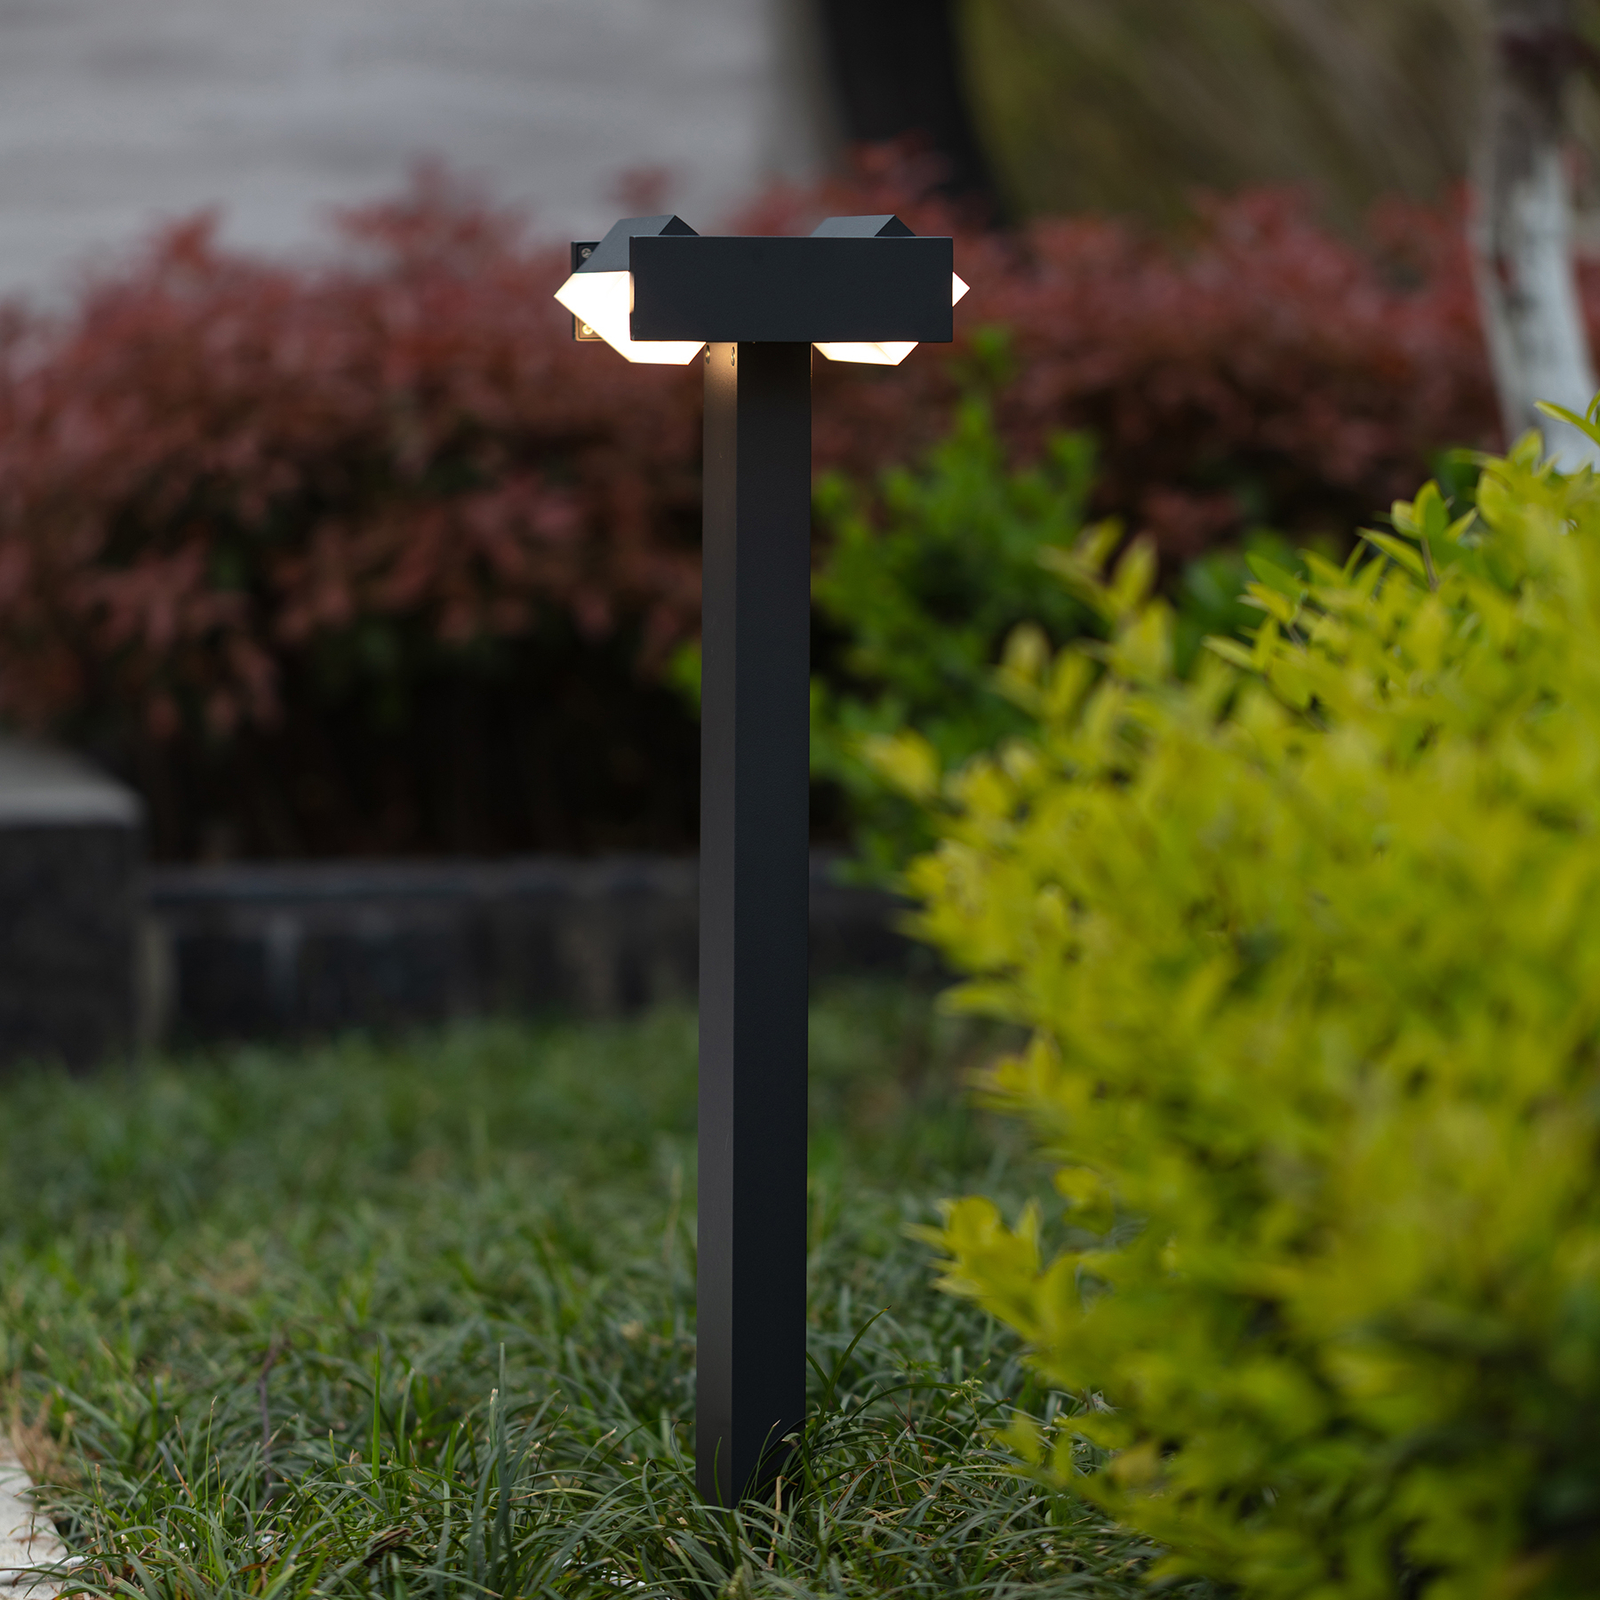 LED tuinpadverlichting Conroy beweeglijke diffusor